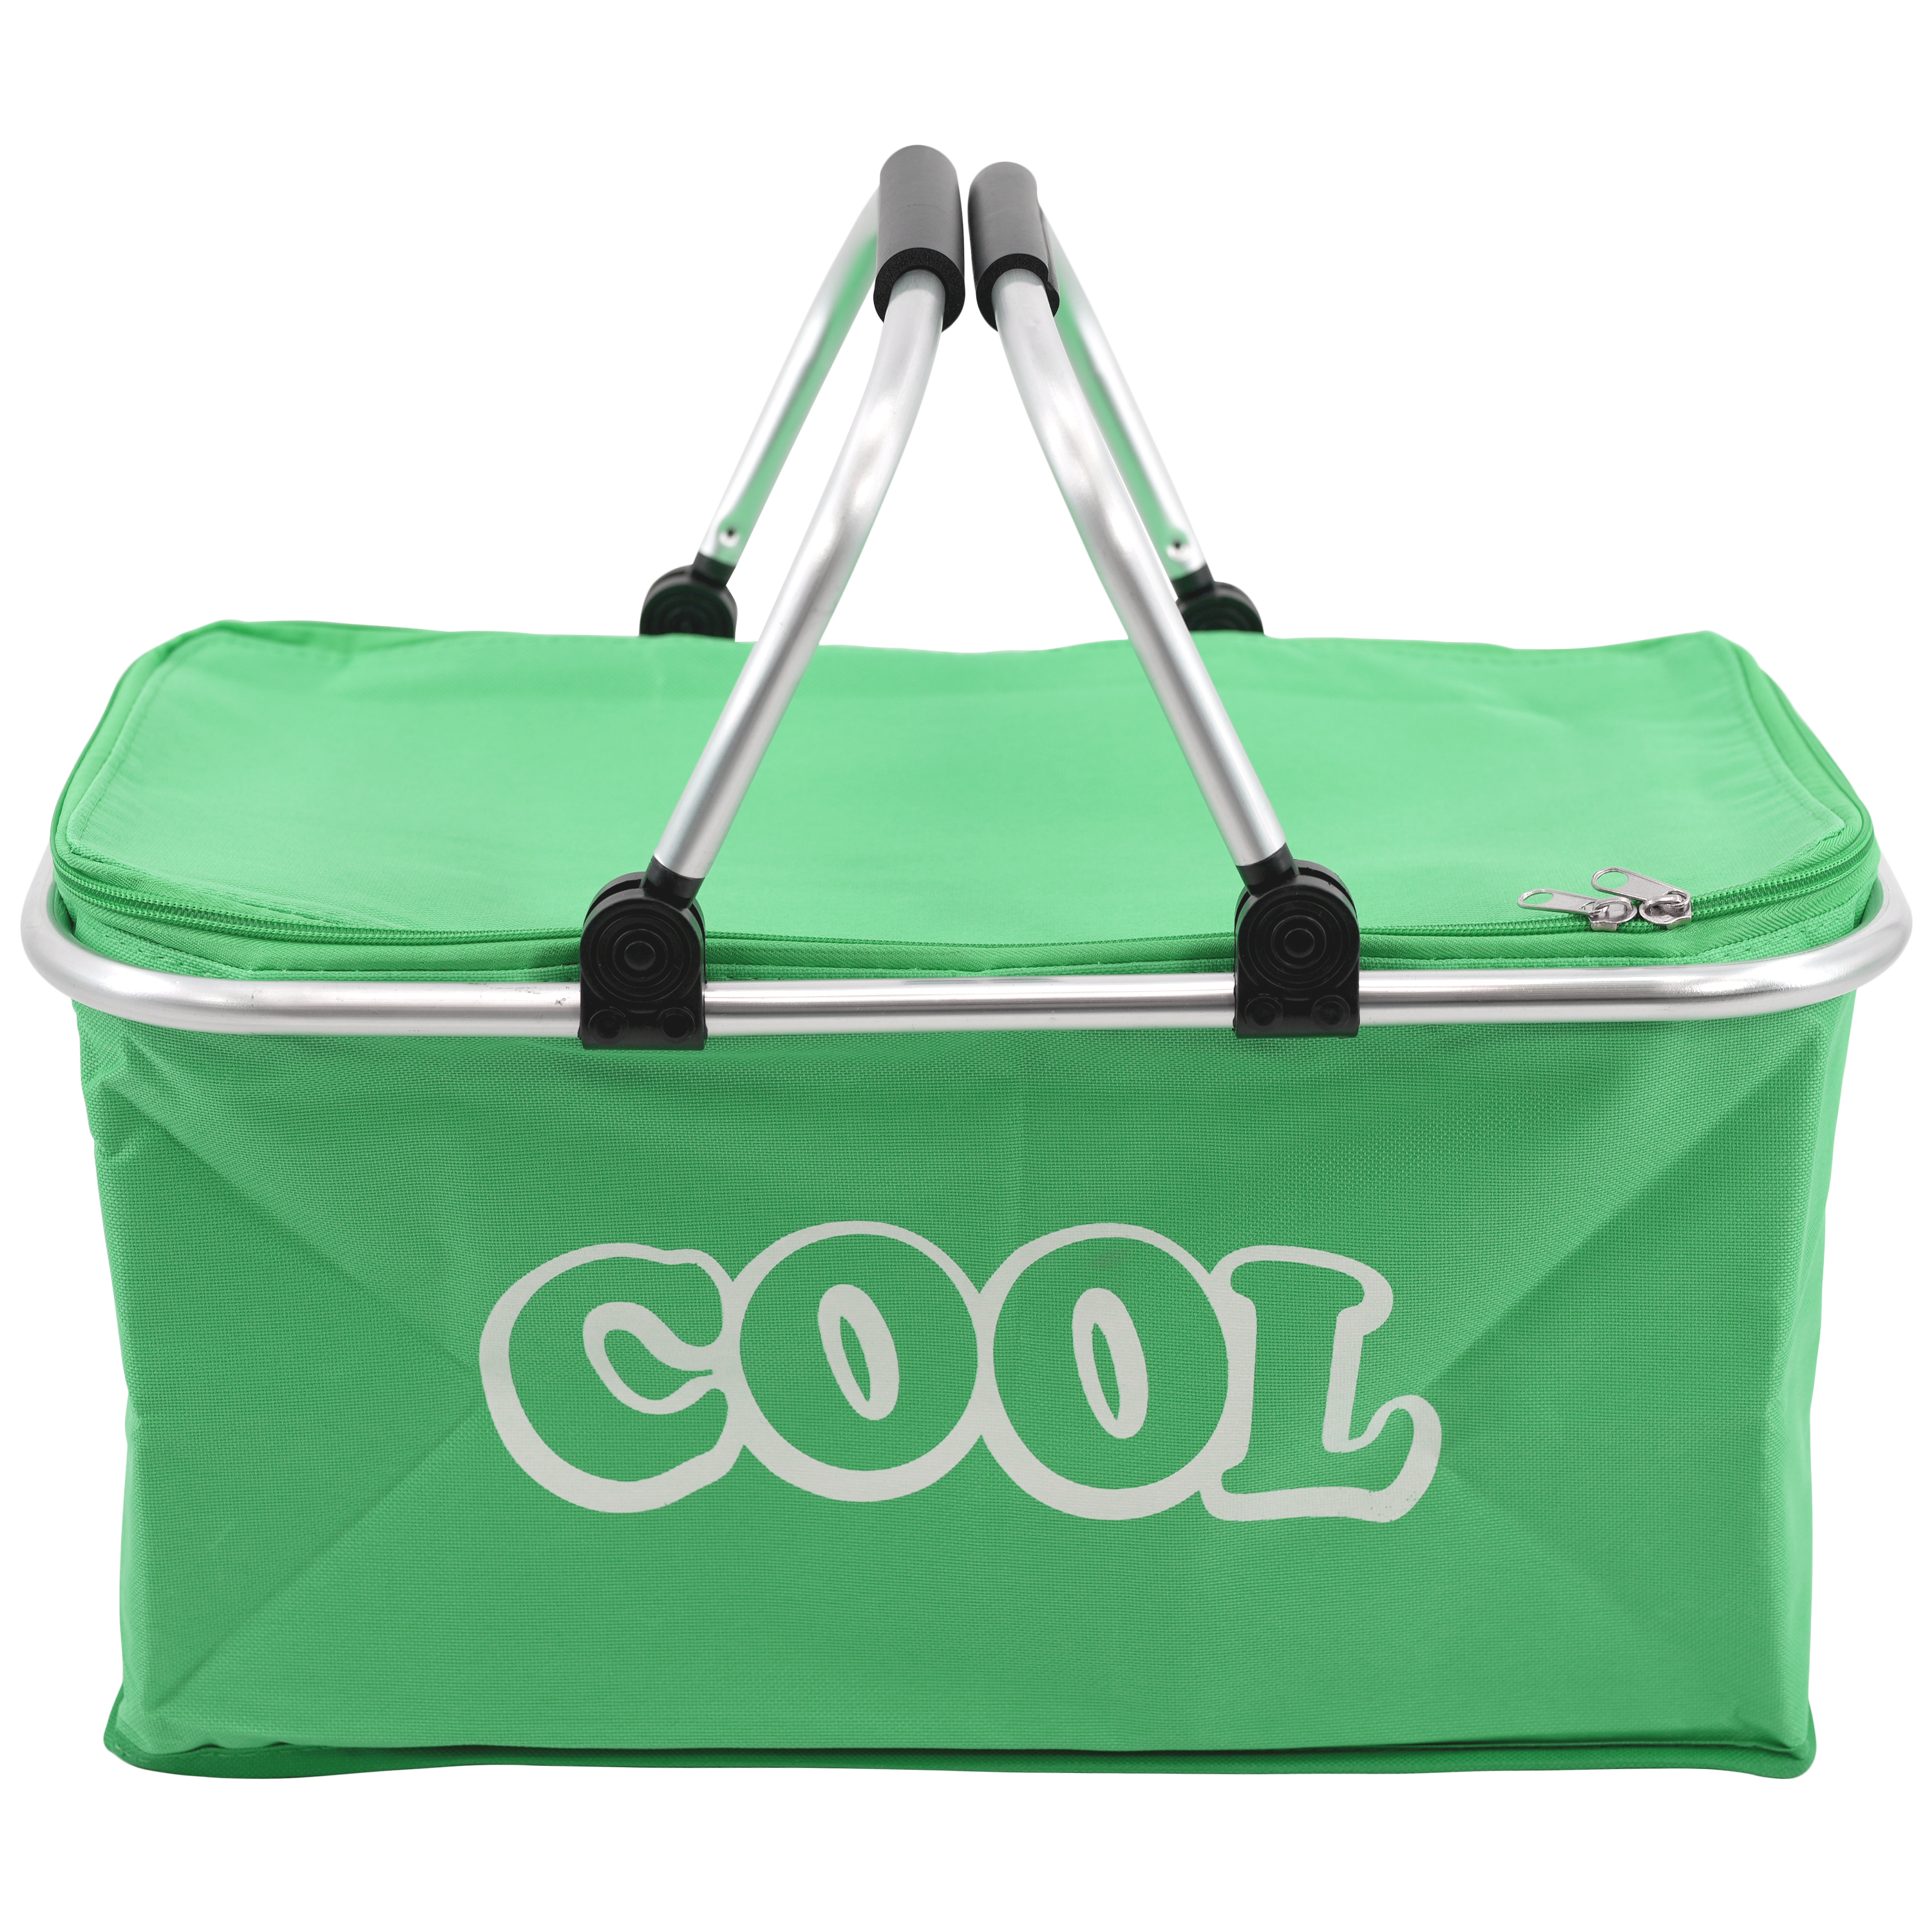 Green Cooler Basket Bag GEEZY - The Magic Toy Shop